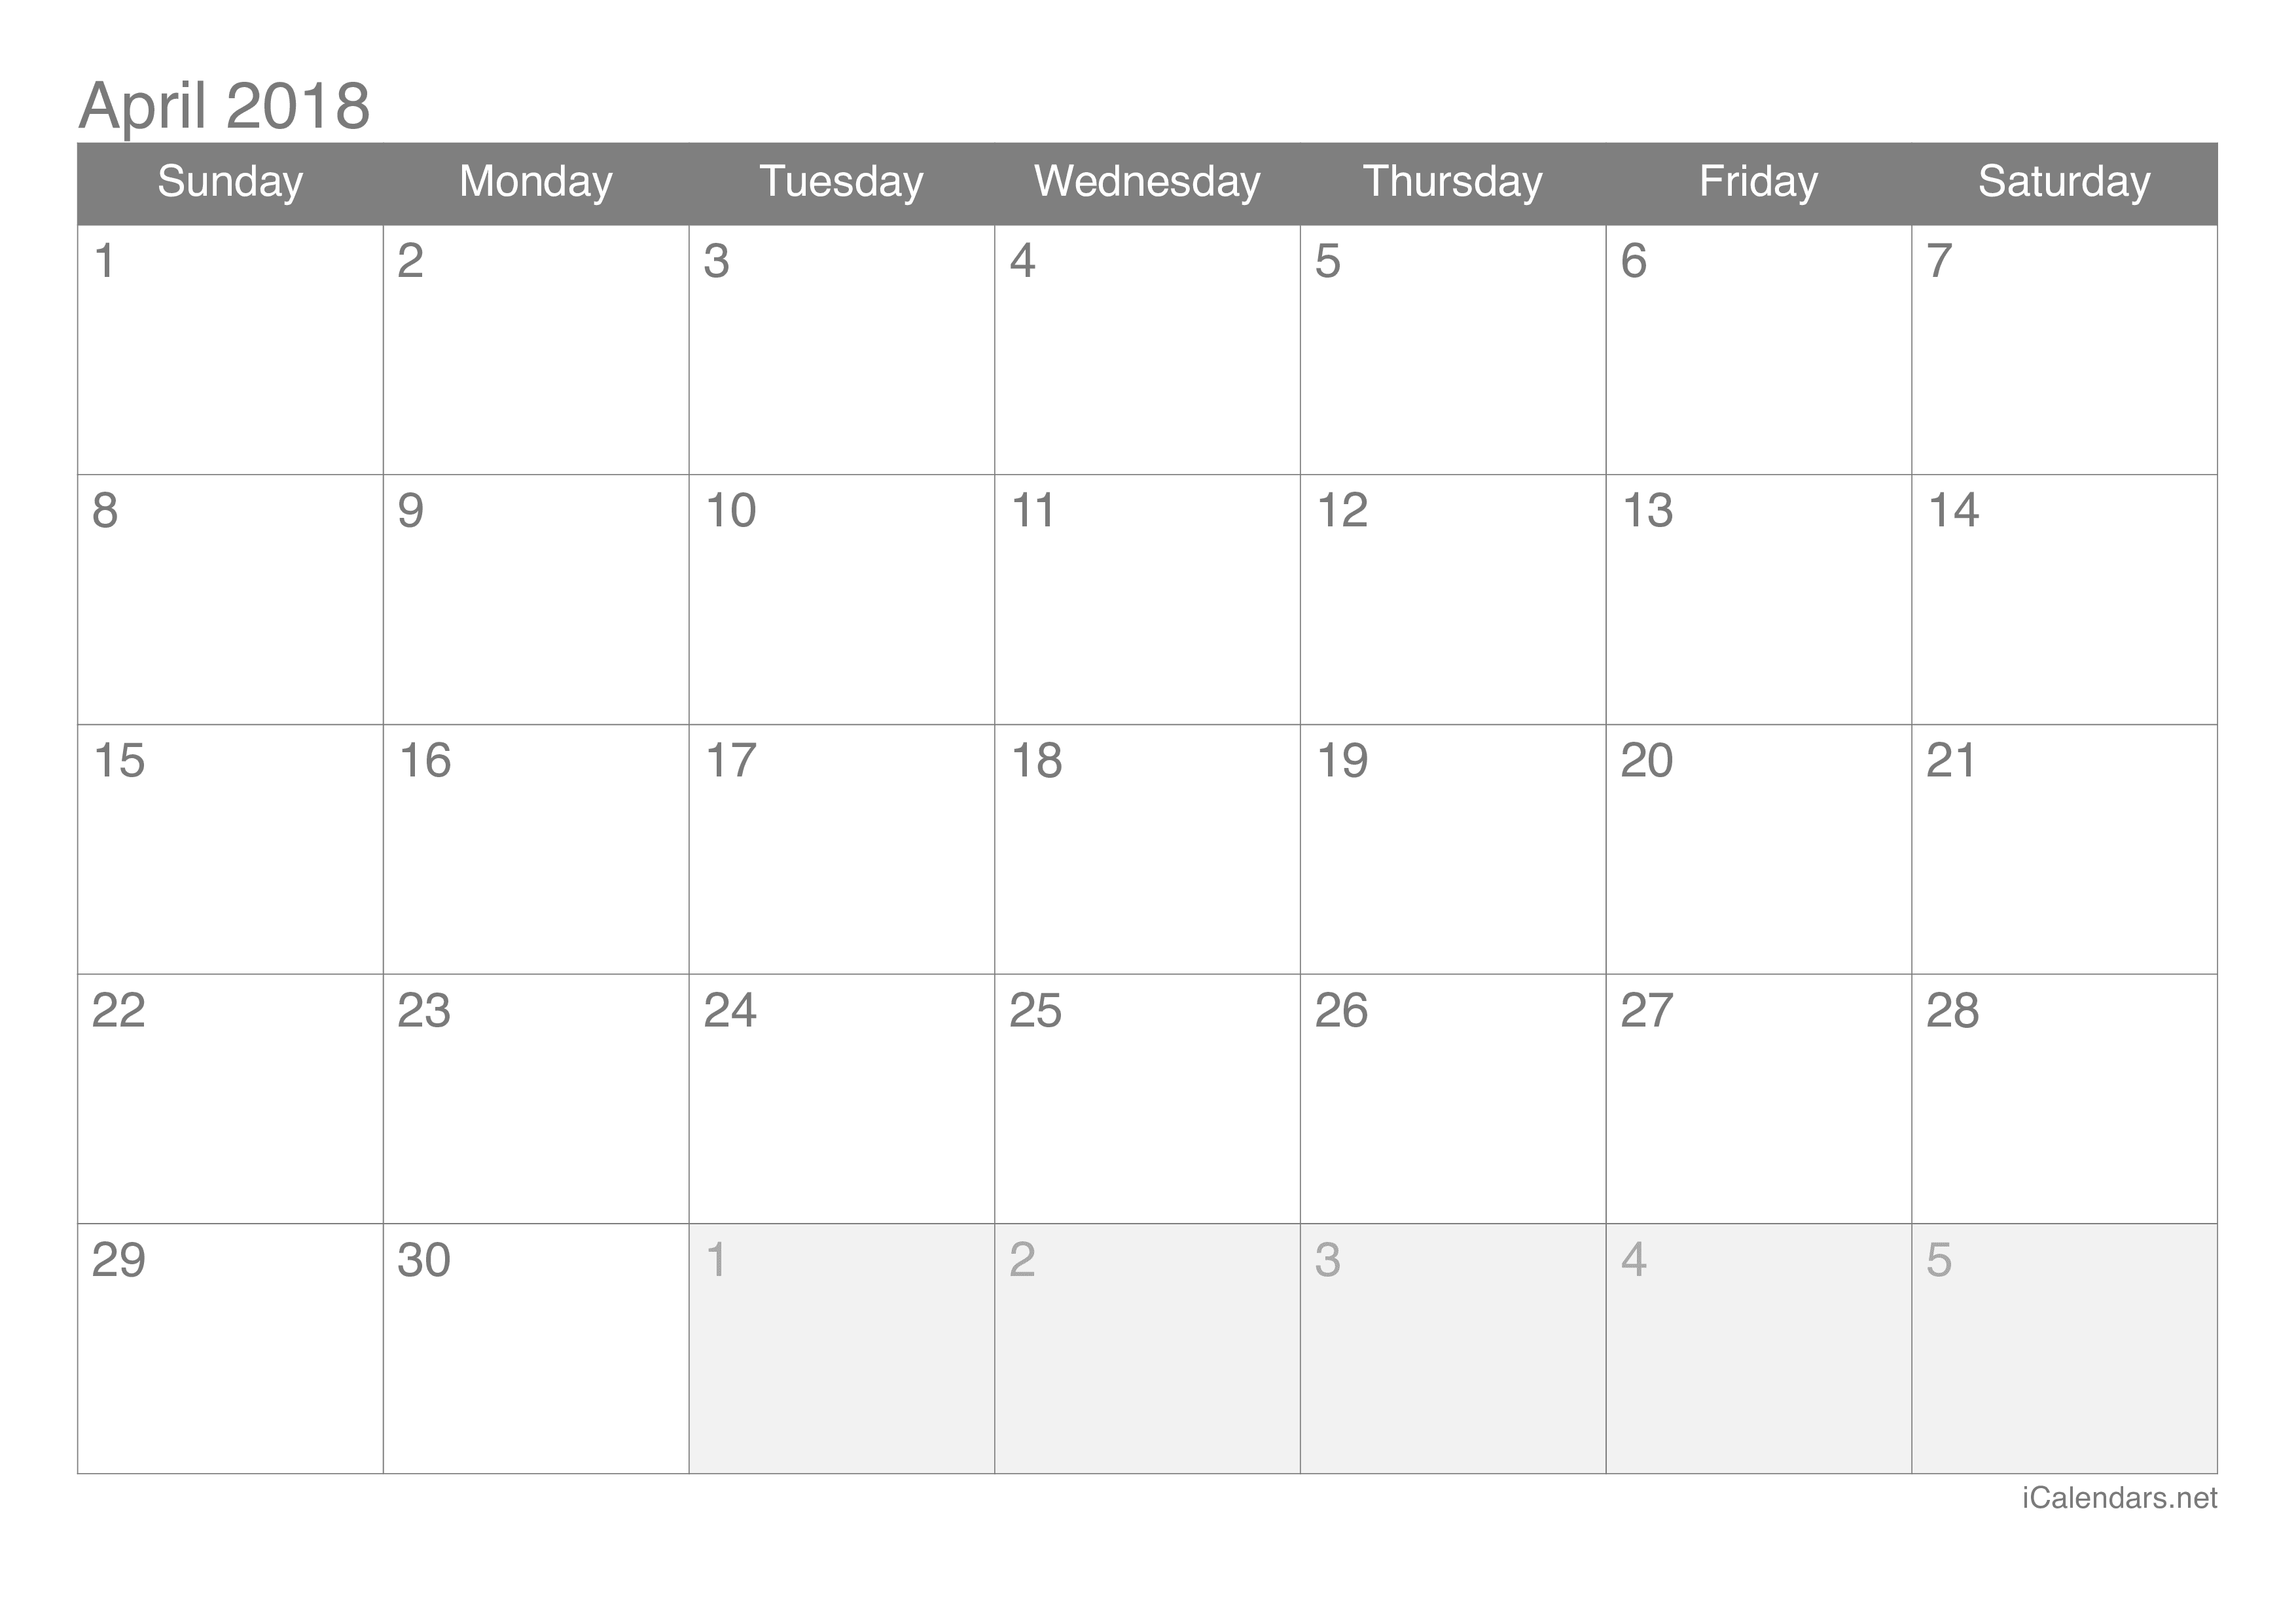 april-2018-calendar-united-states